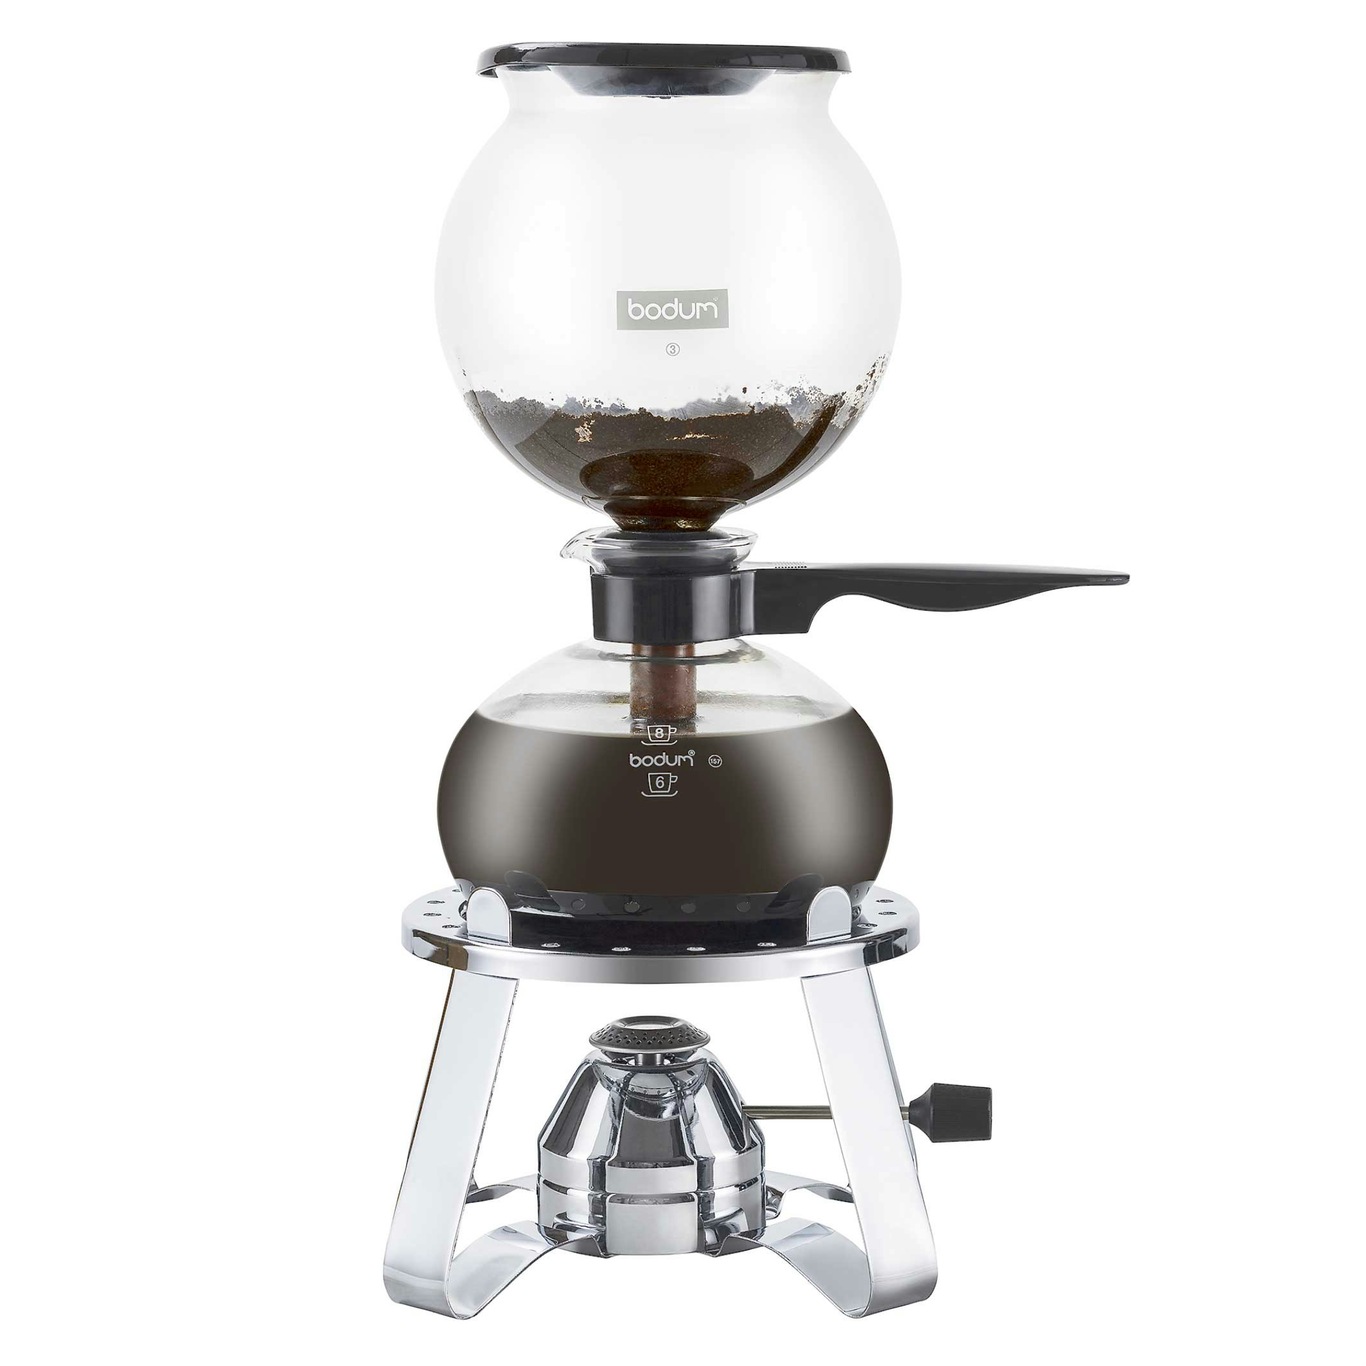 https://royaldesign.com/image/2/bodum-pebo-vacuum-coffee-maker-1-l-black-1?w=800&quality=80